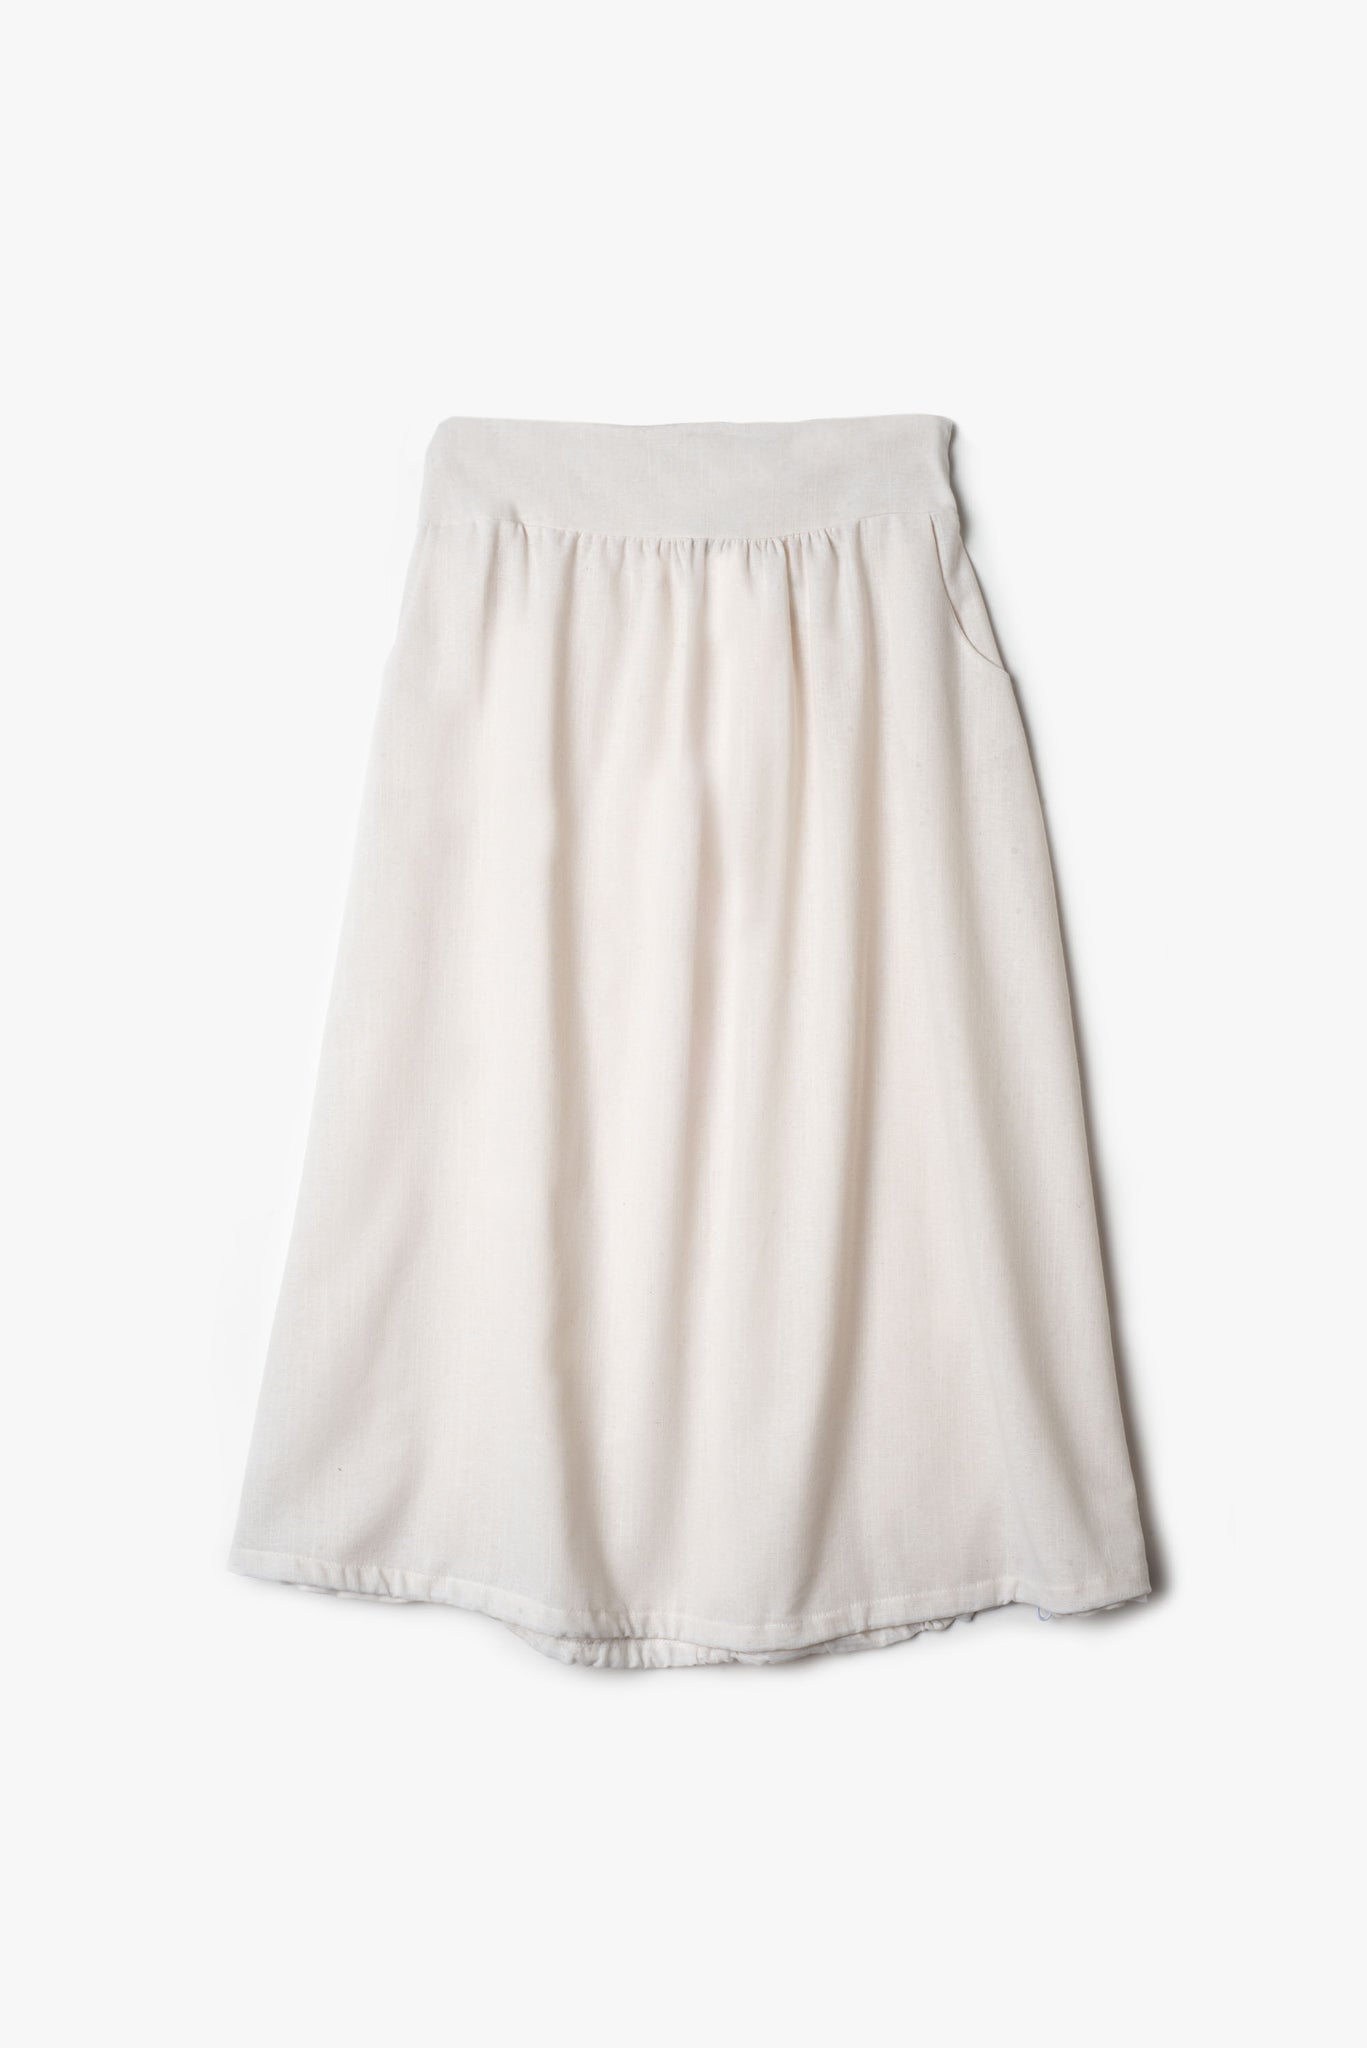 Monochrome skirt